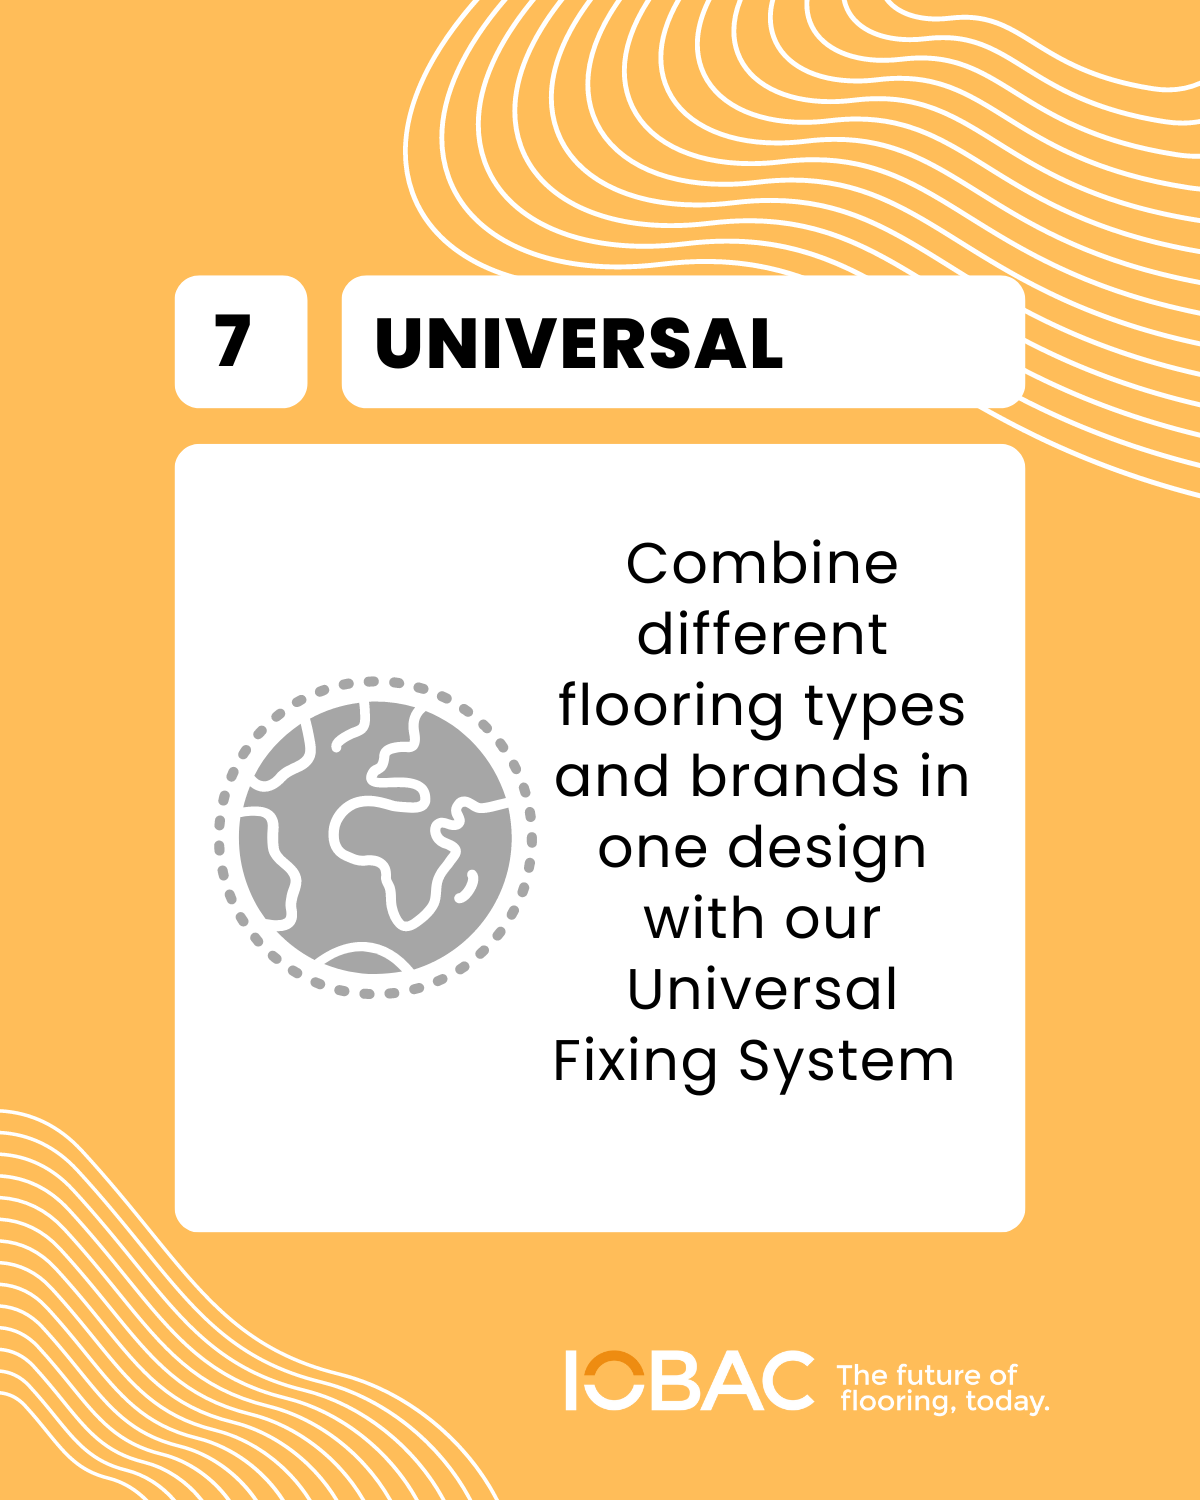 Reasons to Specify Adhesive-free Flooring - Combine flooring types